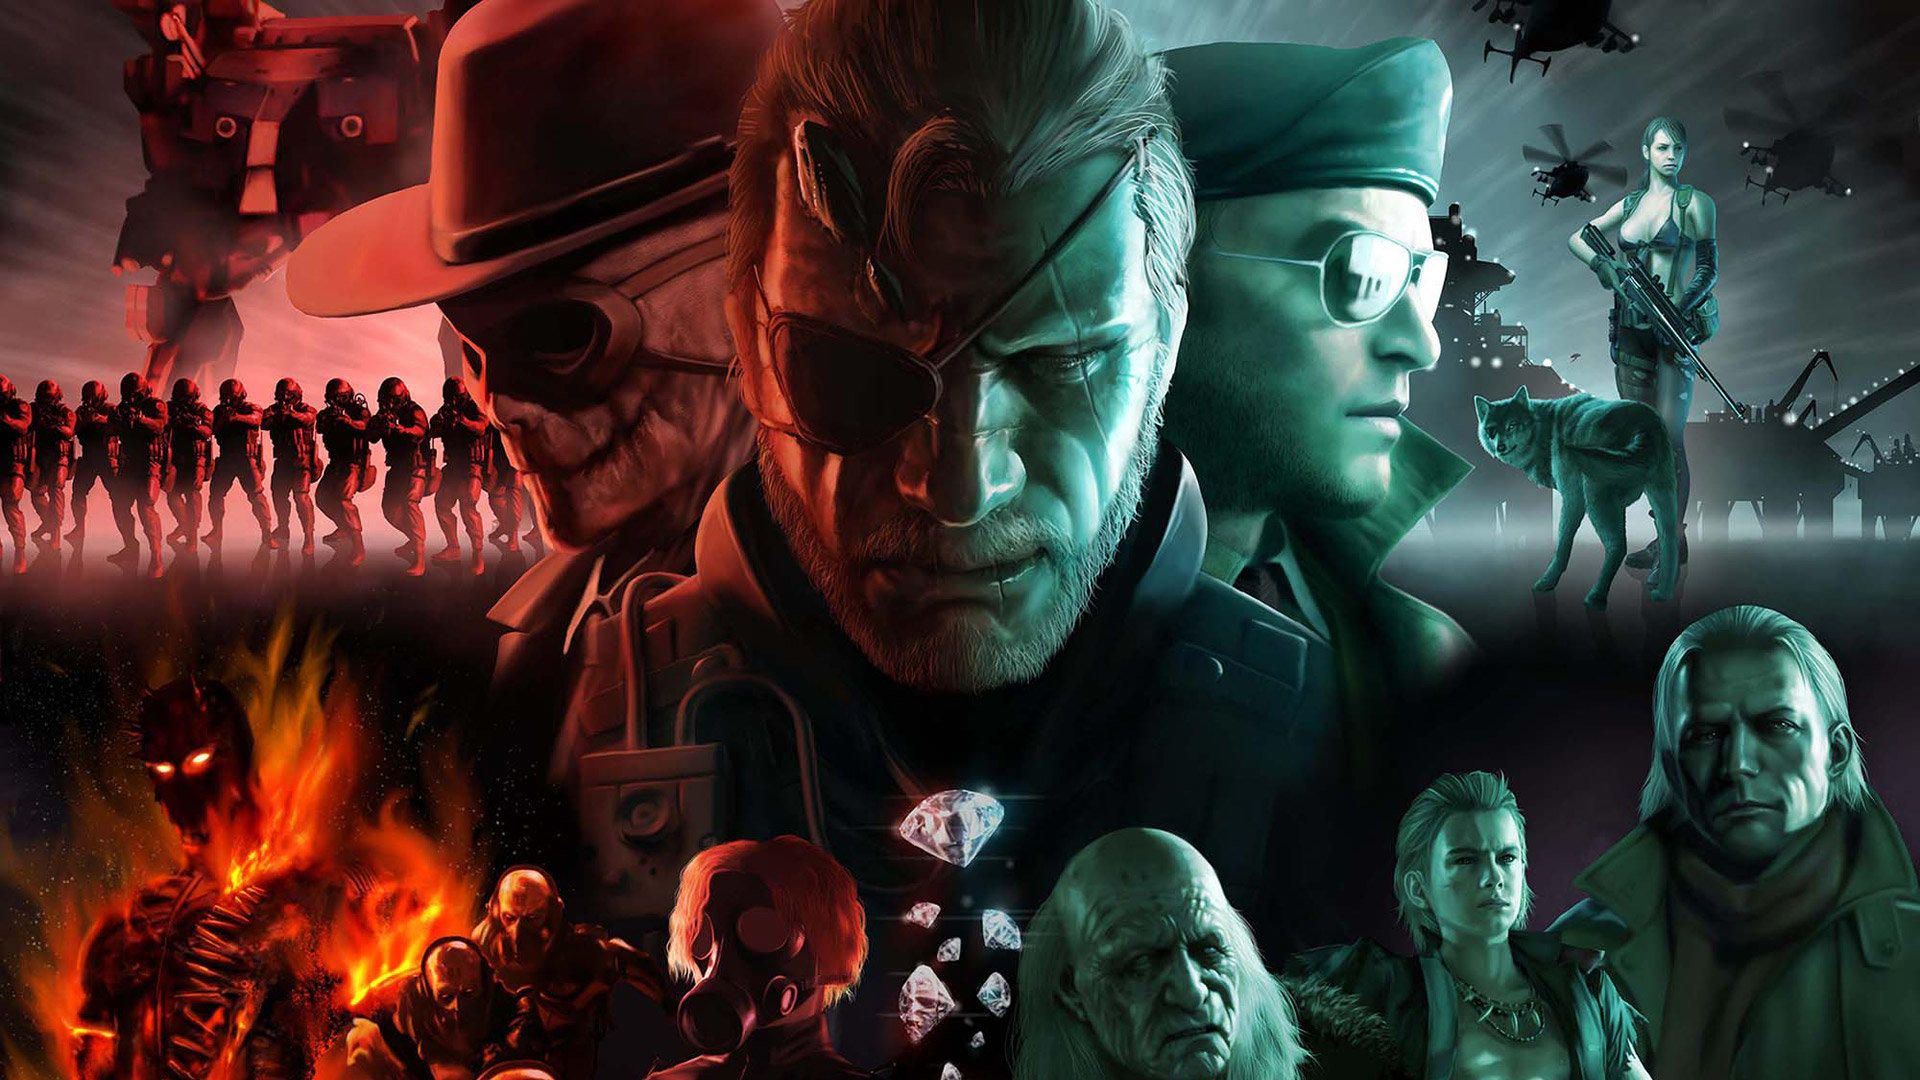 High resolution Metal Gear Solid 5 (V): The Phantom Pain (MGSV 5) hd 1080p wallpaper ID:460426 for computer